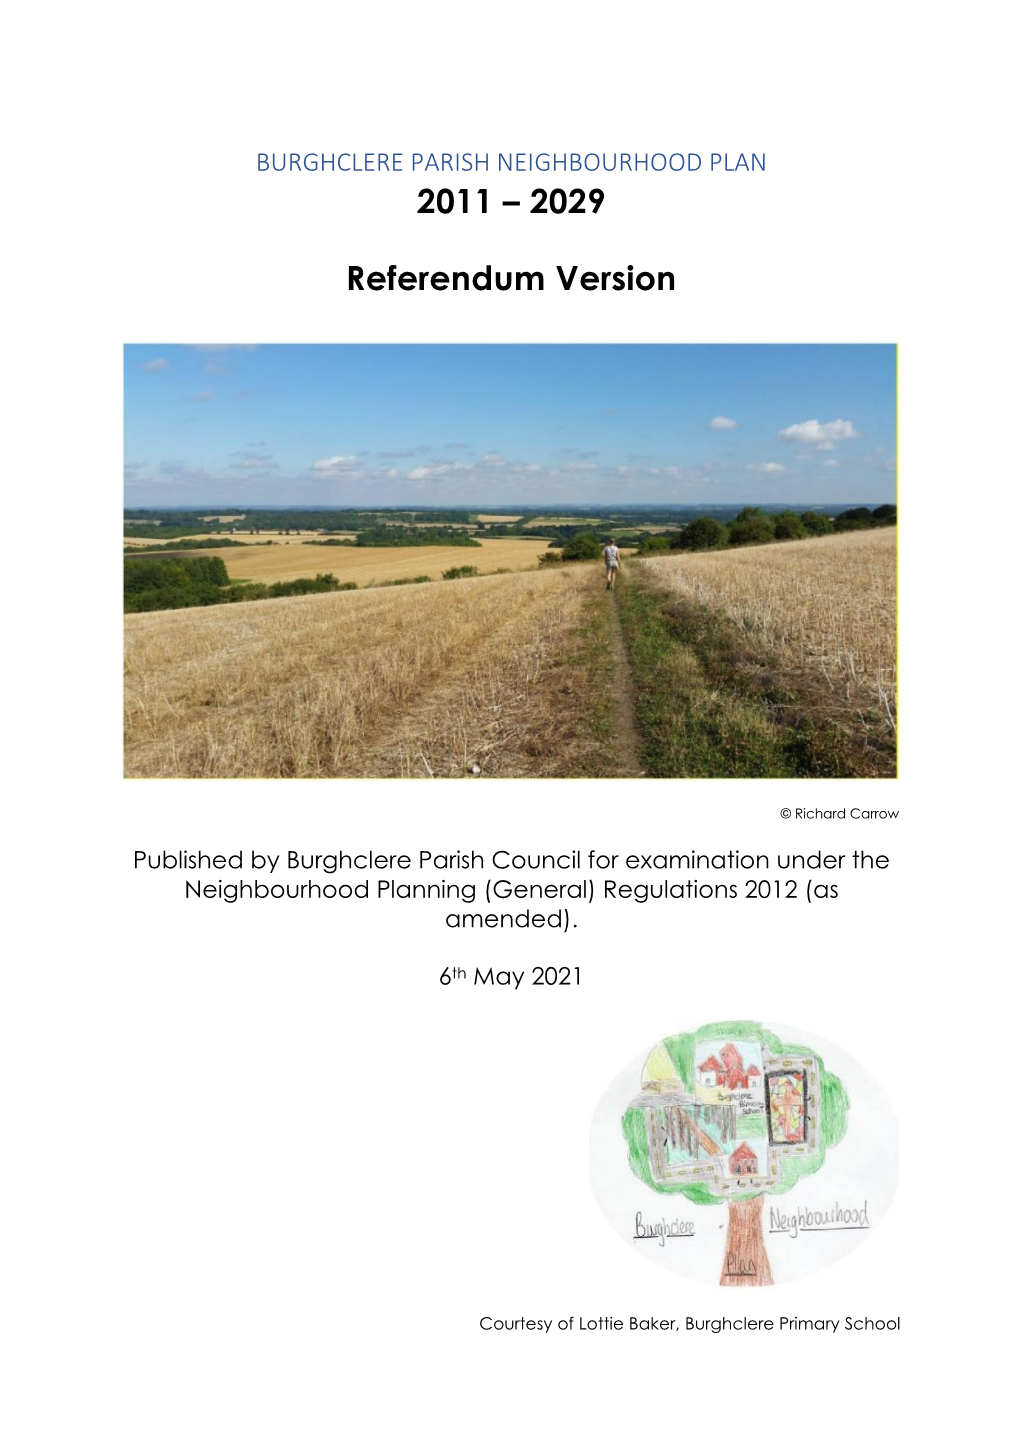 2. Referendum Version of the Burghclere Neighbourhood Plan